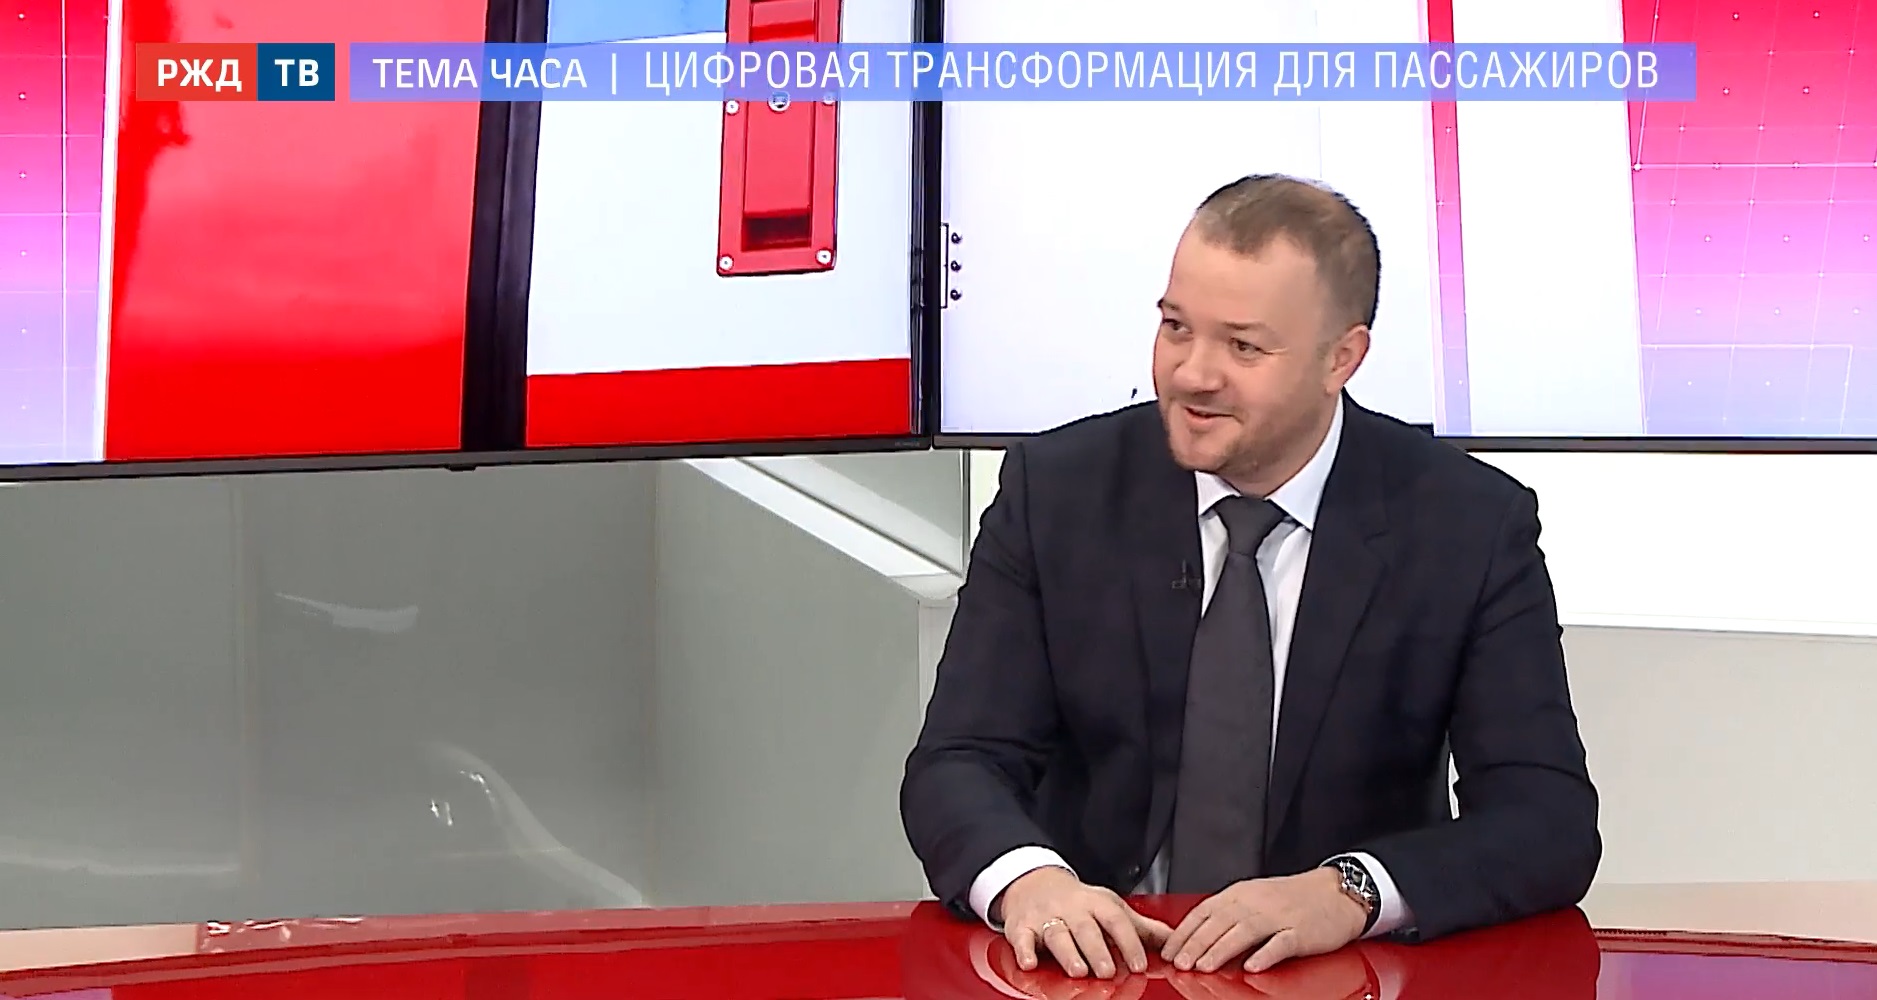 Фото: Скриншот эфира "РЖД ТВ"